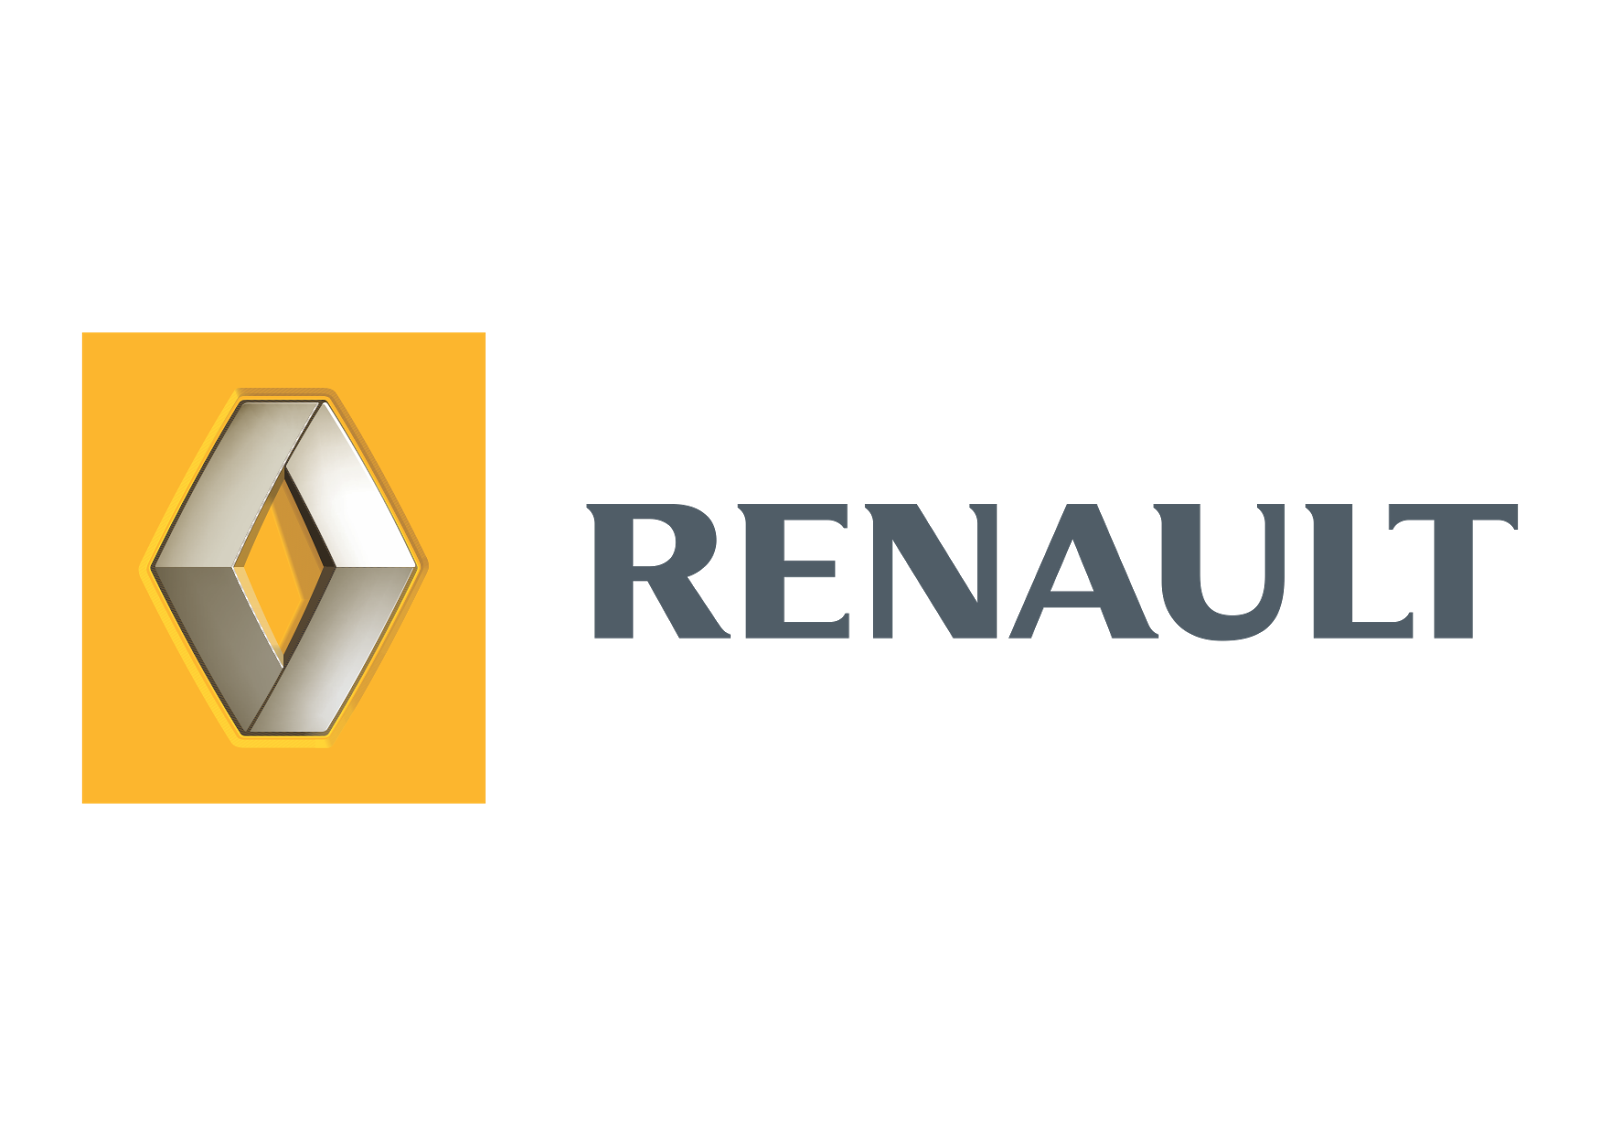 Renault Vector PNG Transparent Renault Vector.PNG Images. | PlusPNG